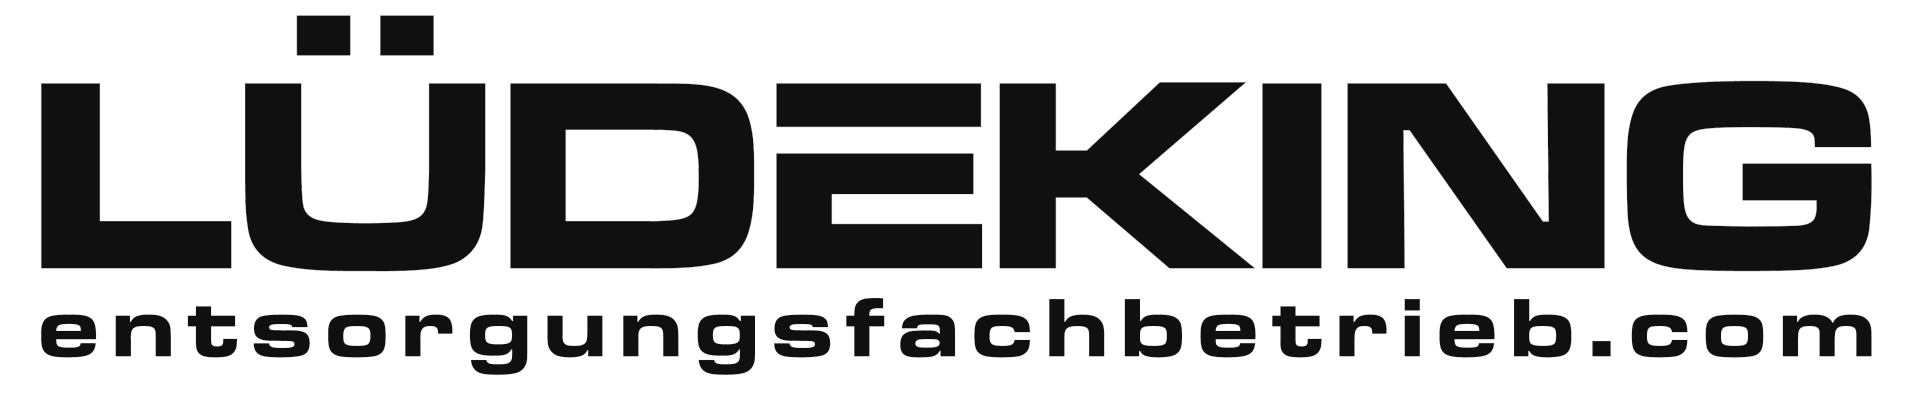 Peter Lüdeking GmbH & Co. KG Logo